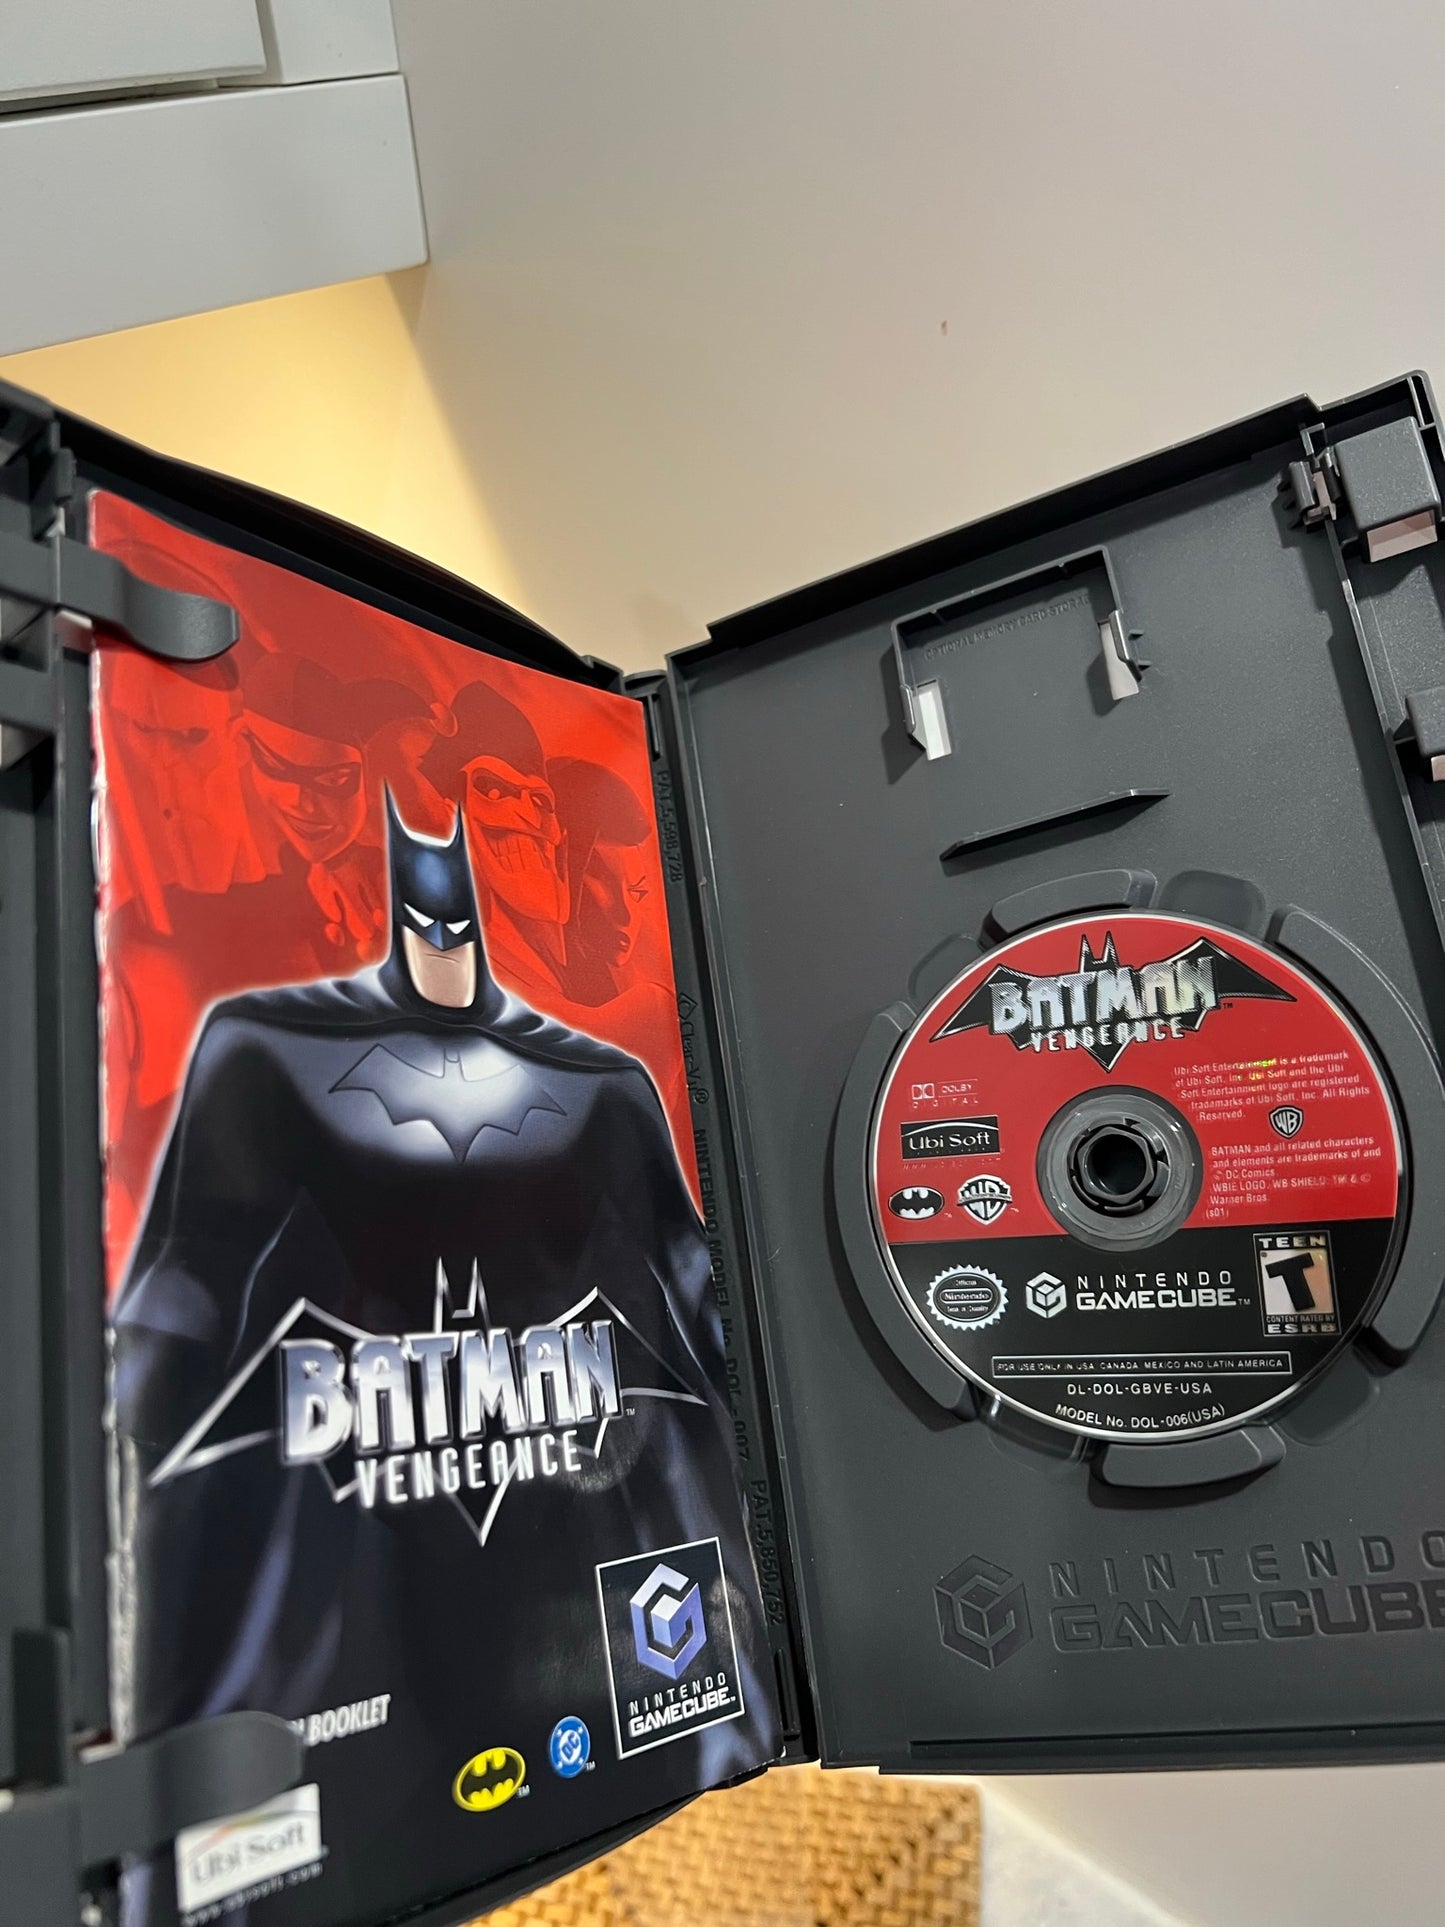 Batman: Vengeance (Nintendo GameCube, 2001)